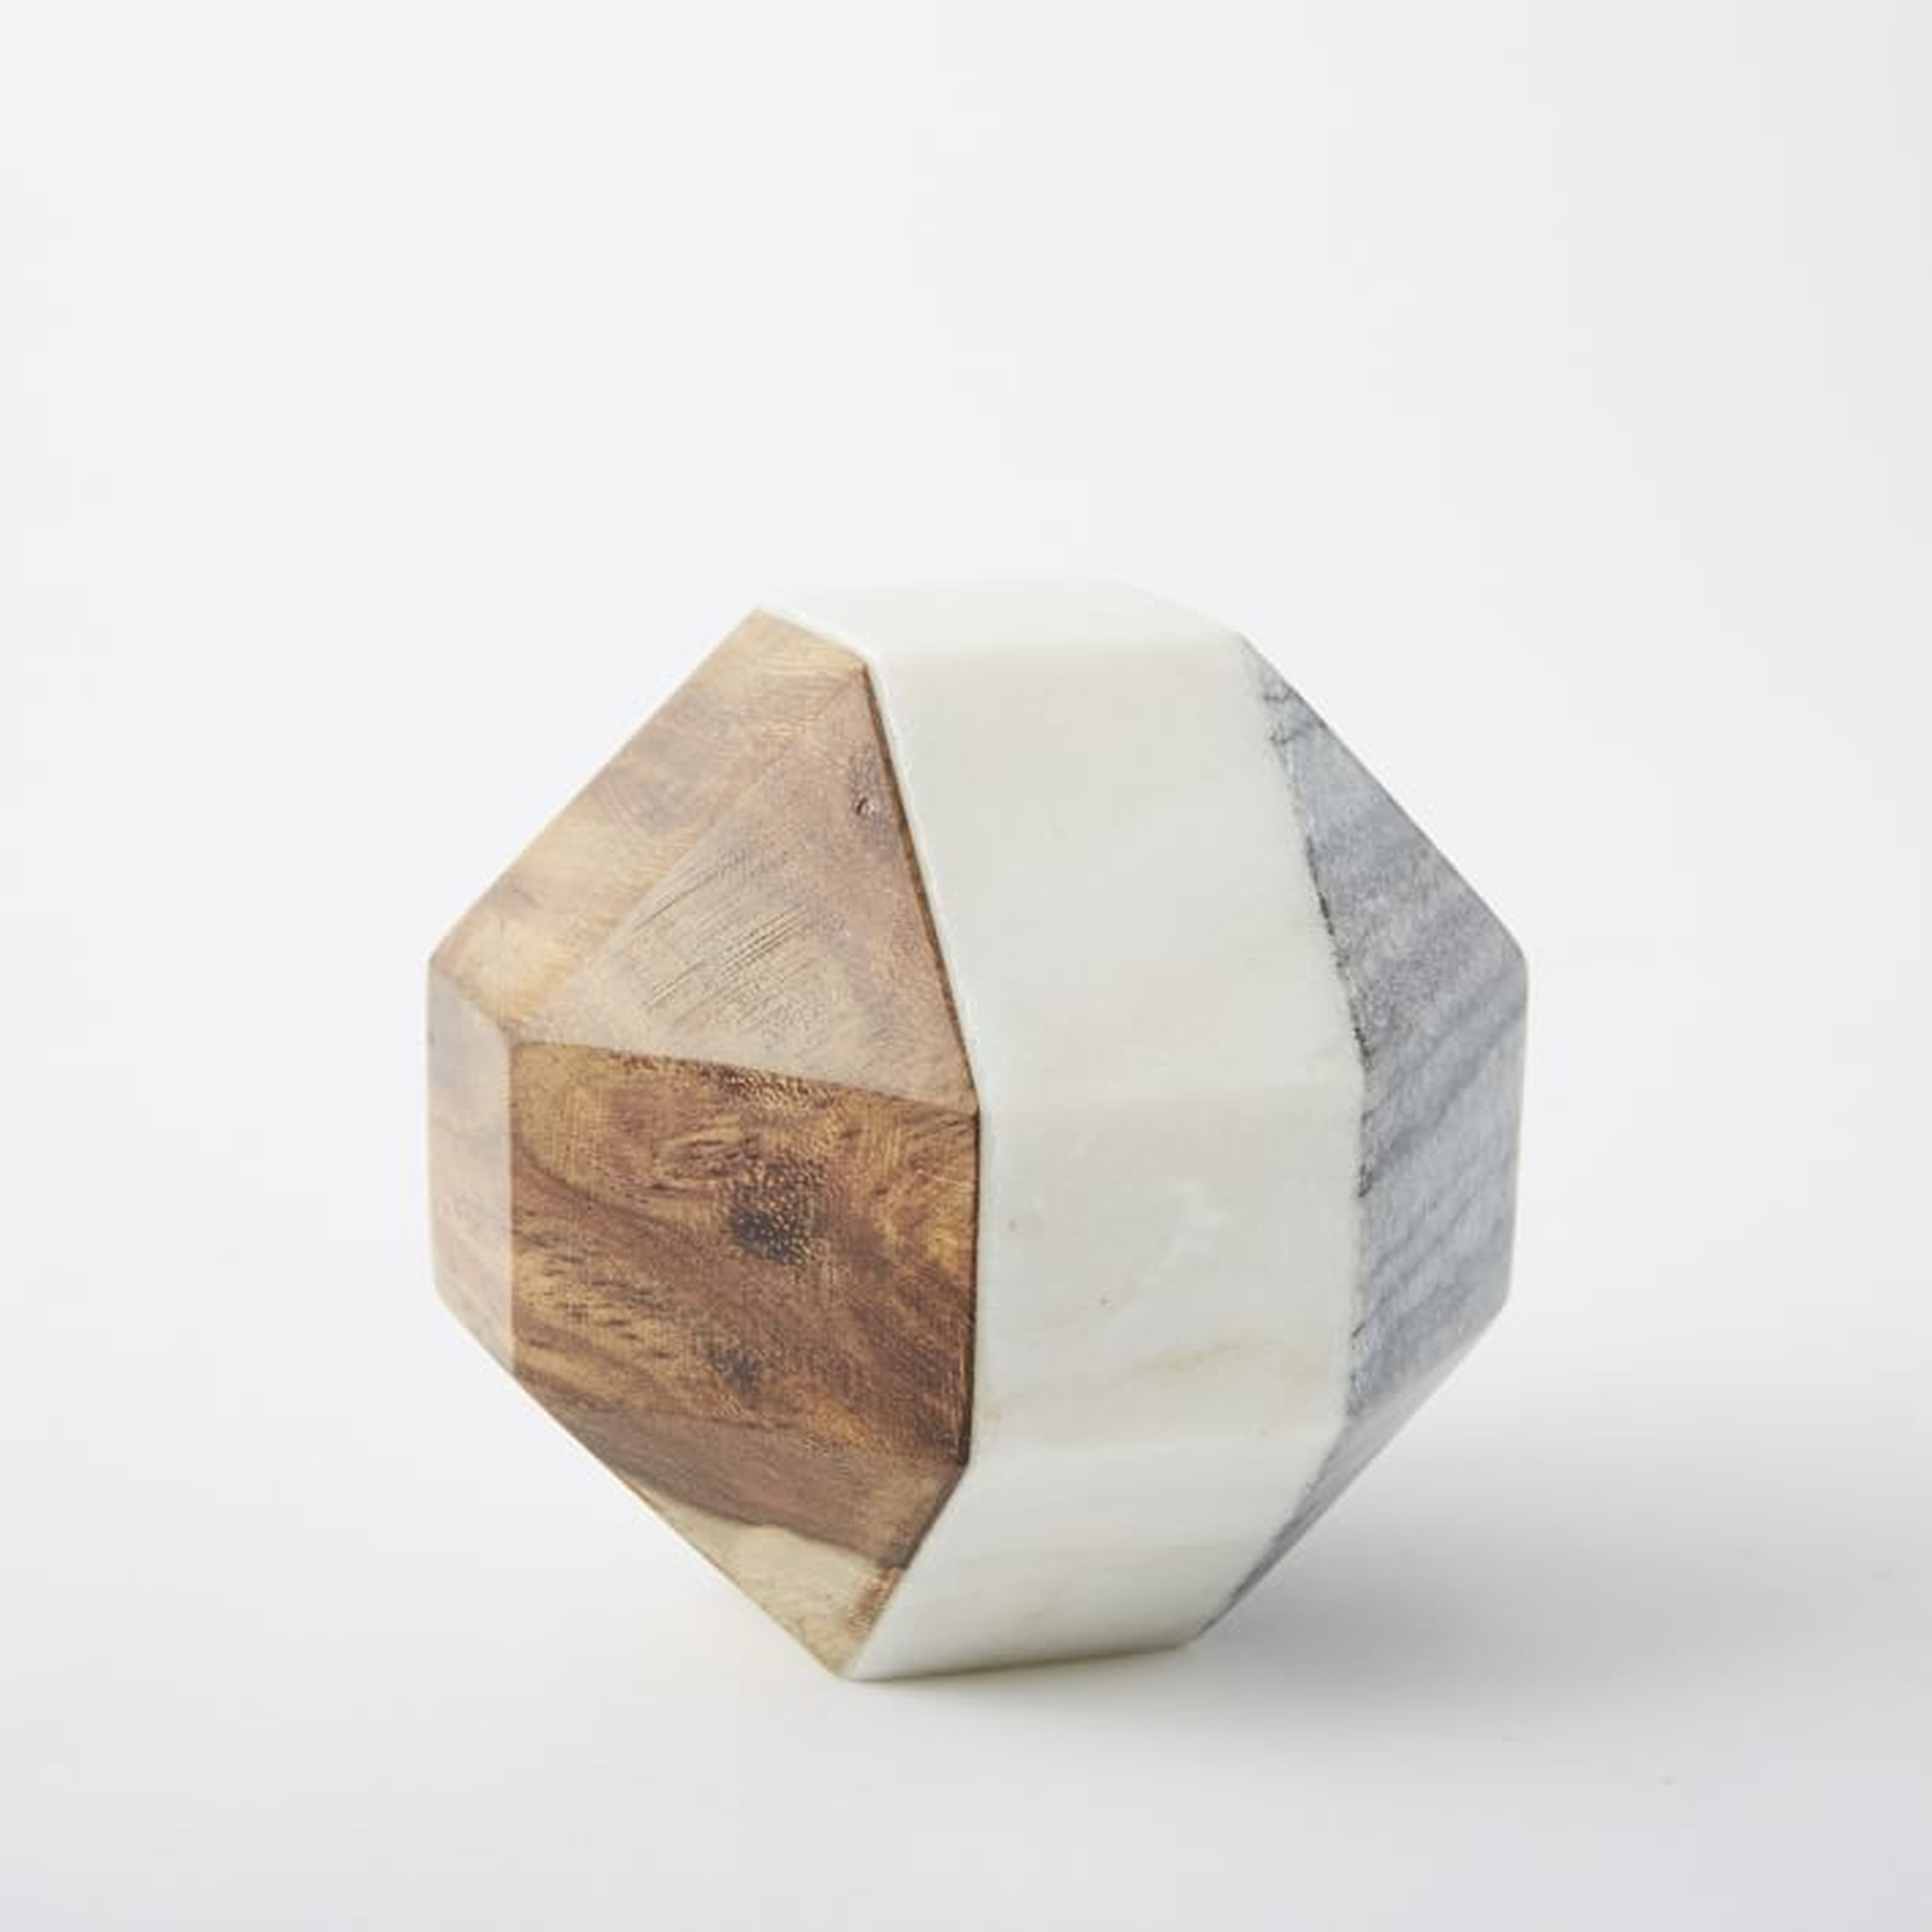 Marble & Wood Geometric Objects (SET OF 2) - West Elm